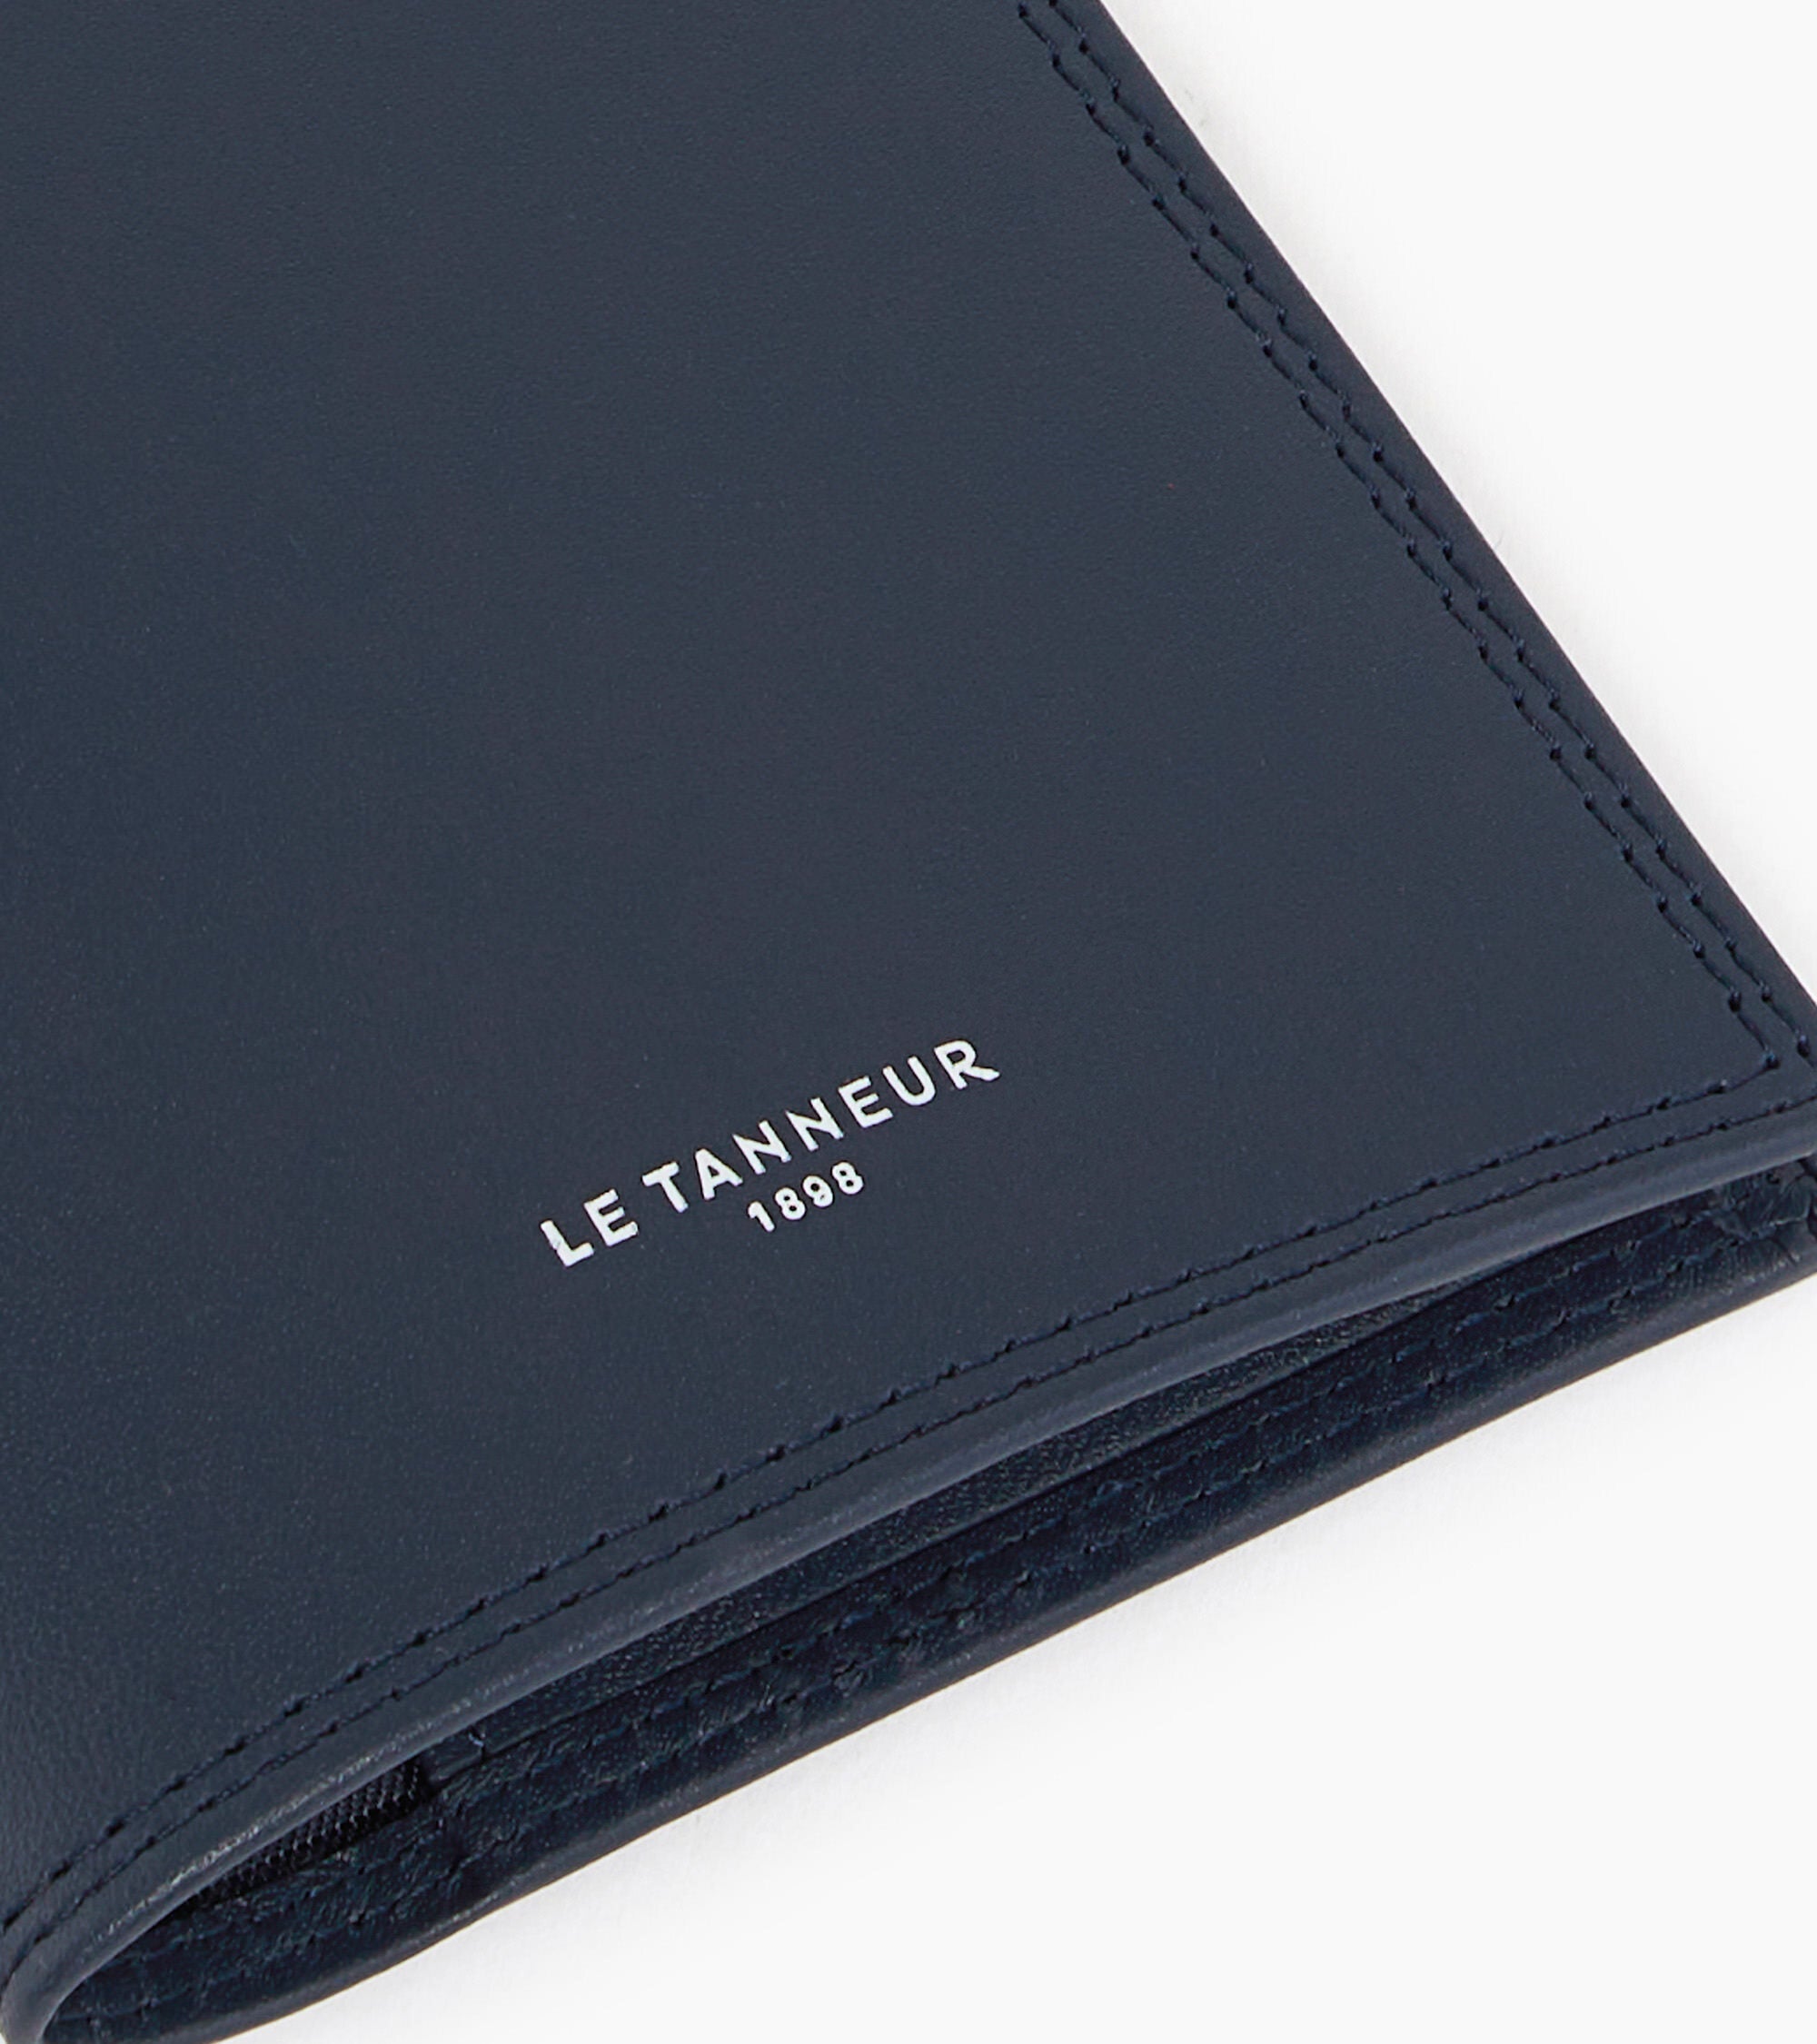 Martin passport holder in smooth leather